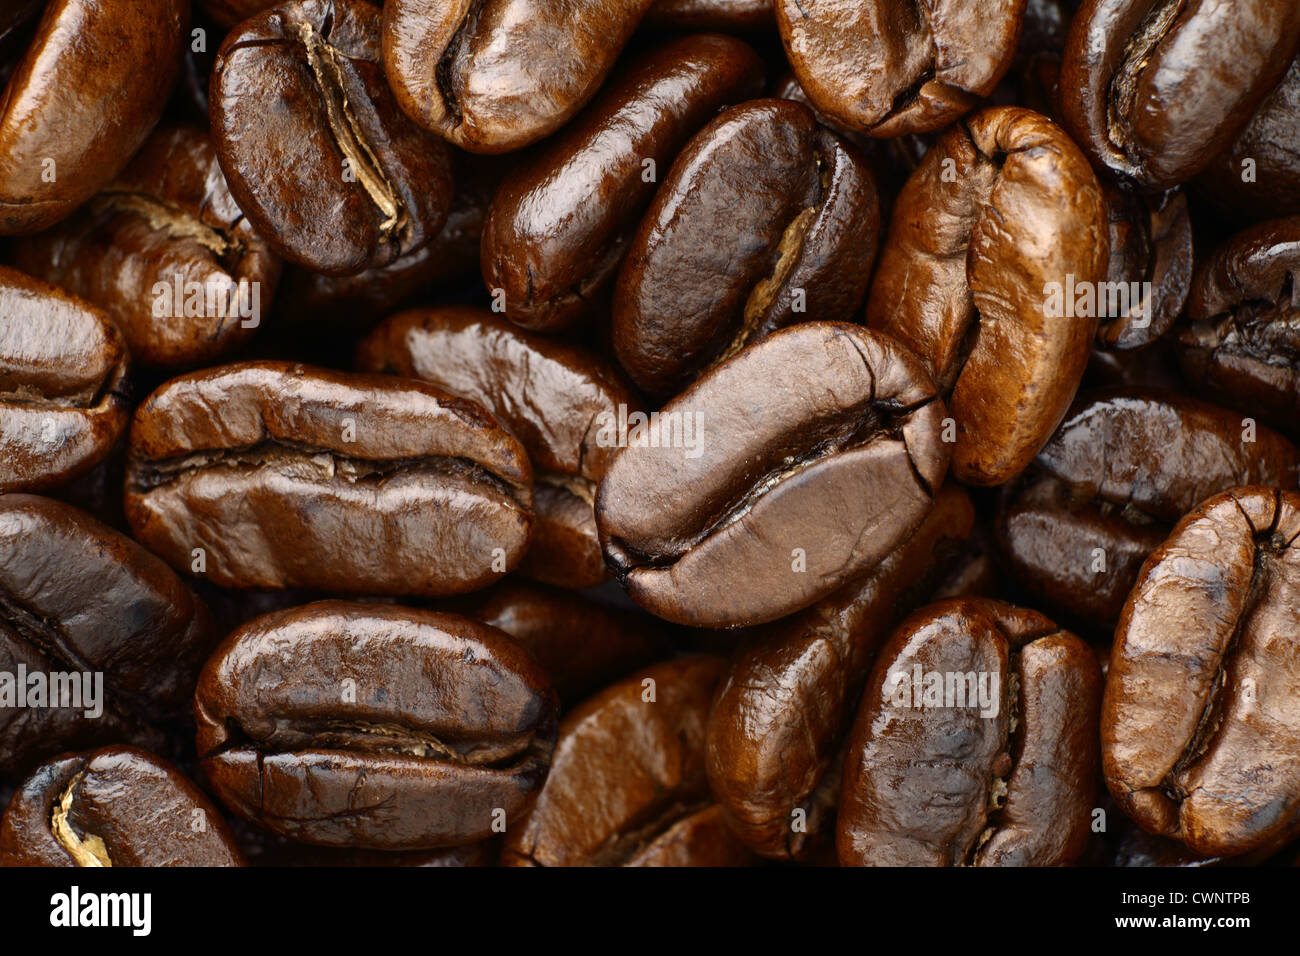 roasted coffee beans arabica Stock Photo